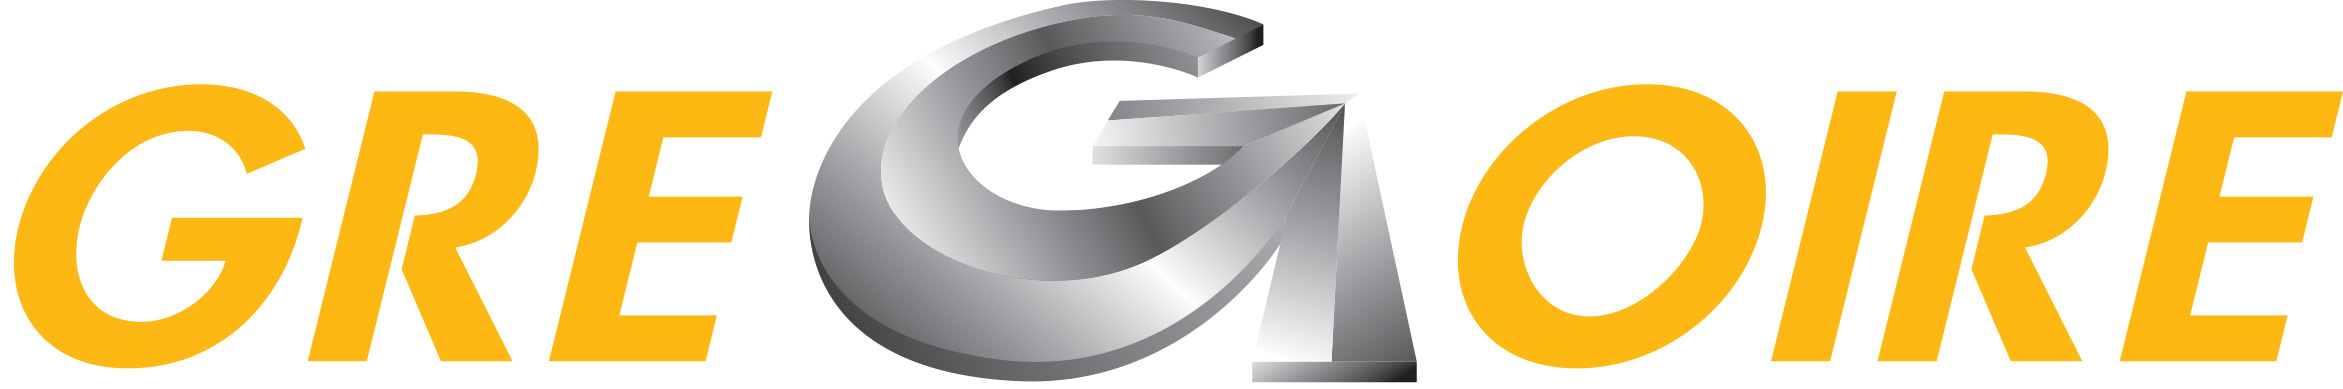 Logo-GreGoire